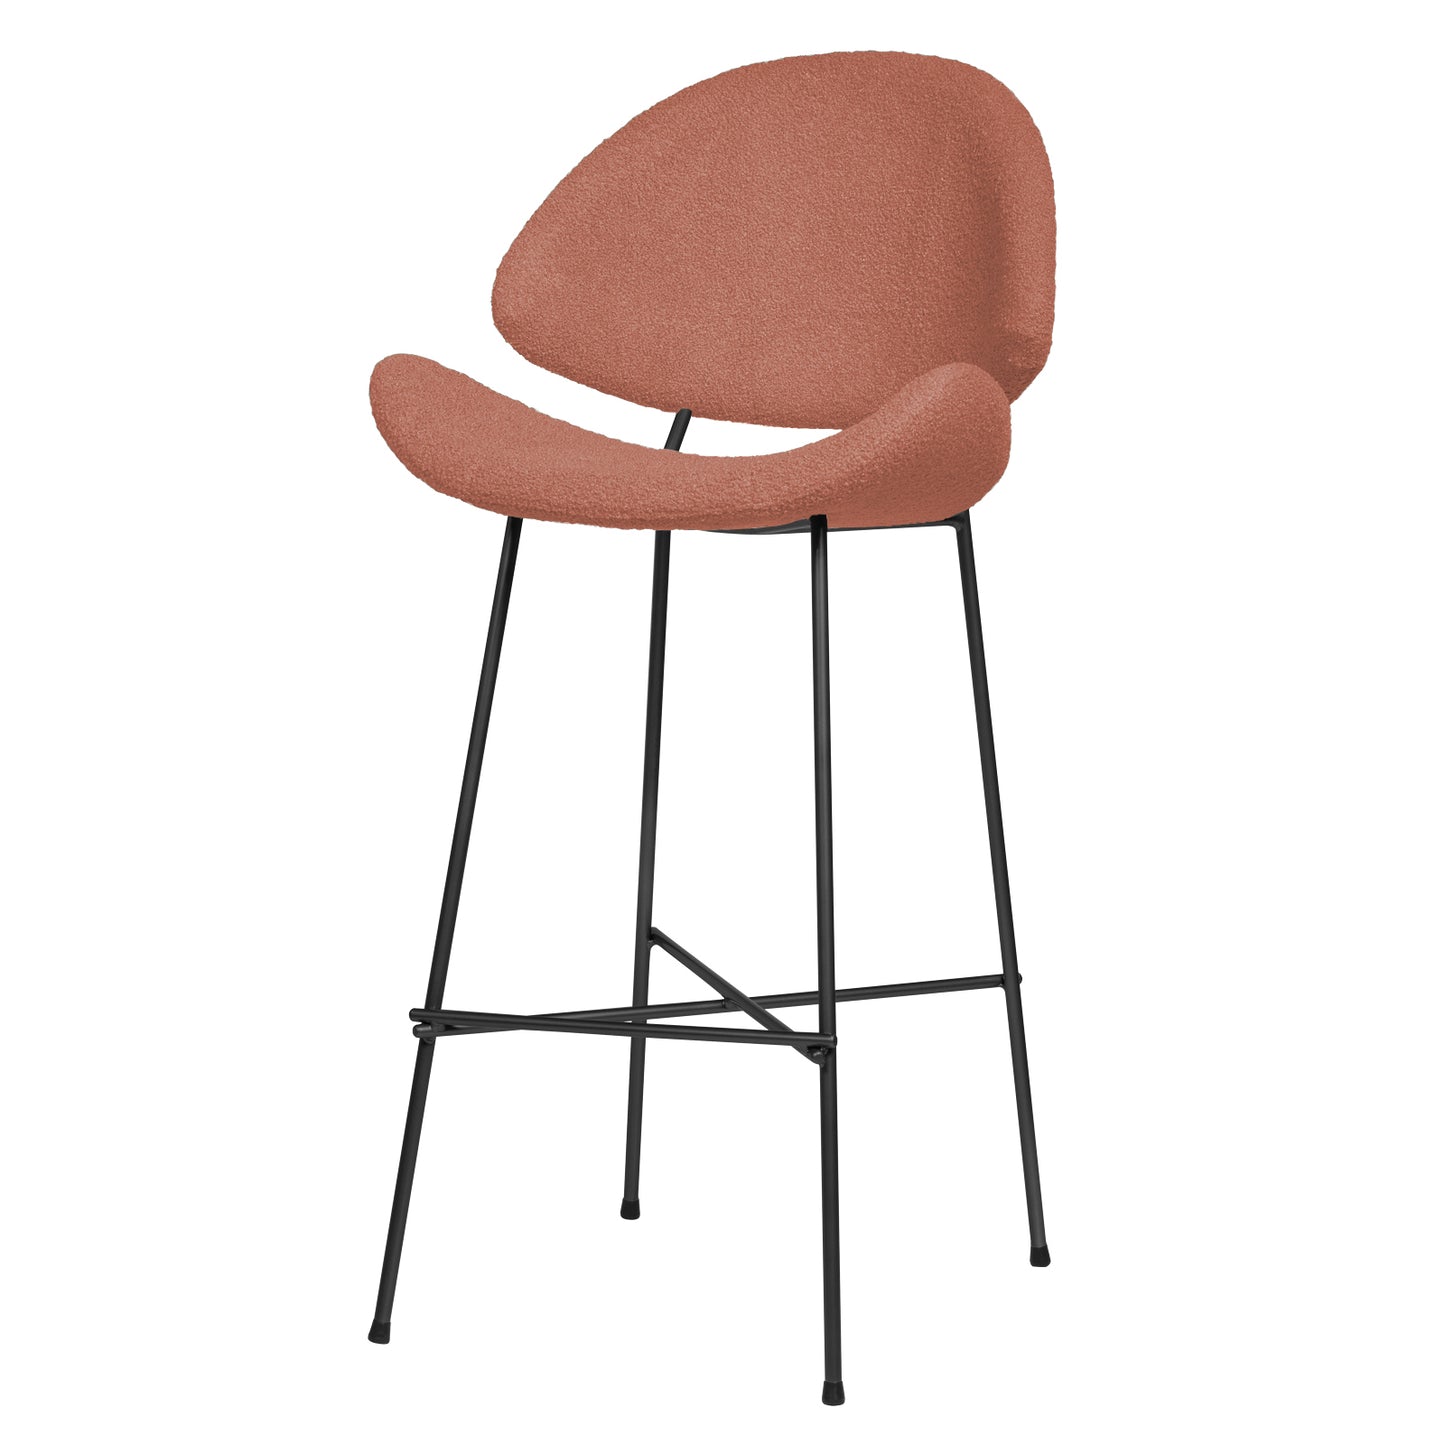 Krzesło barowe Cheri Bar Boucle High - Ceglaste